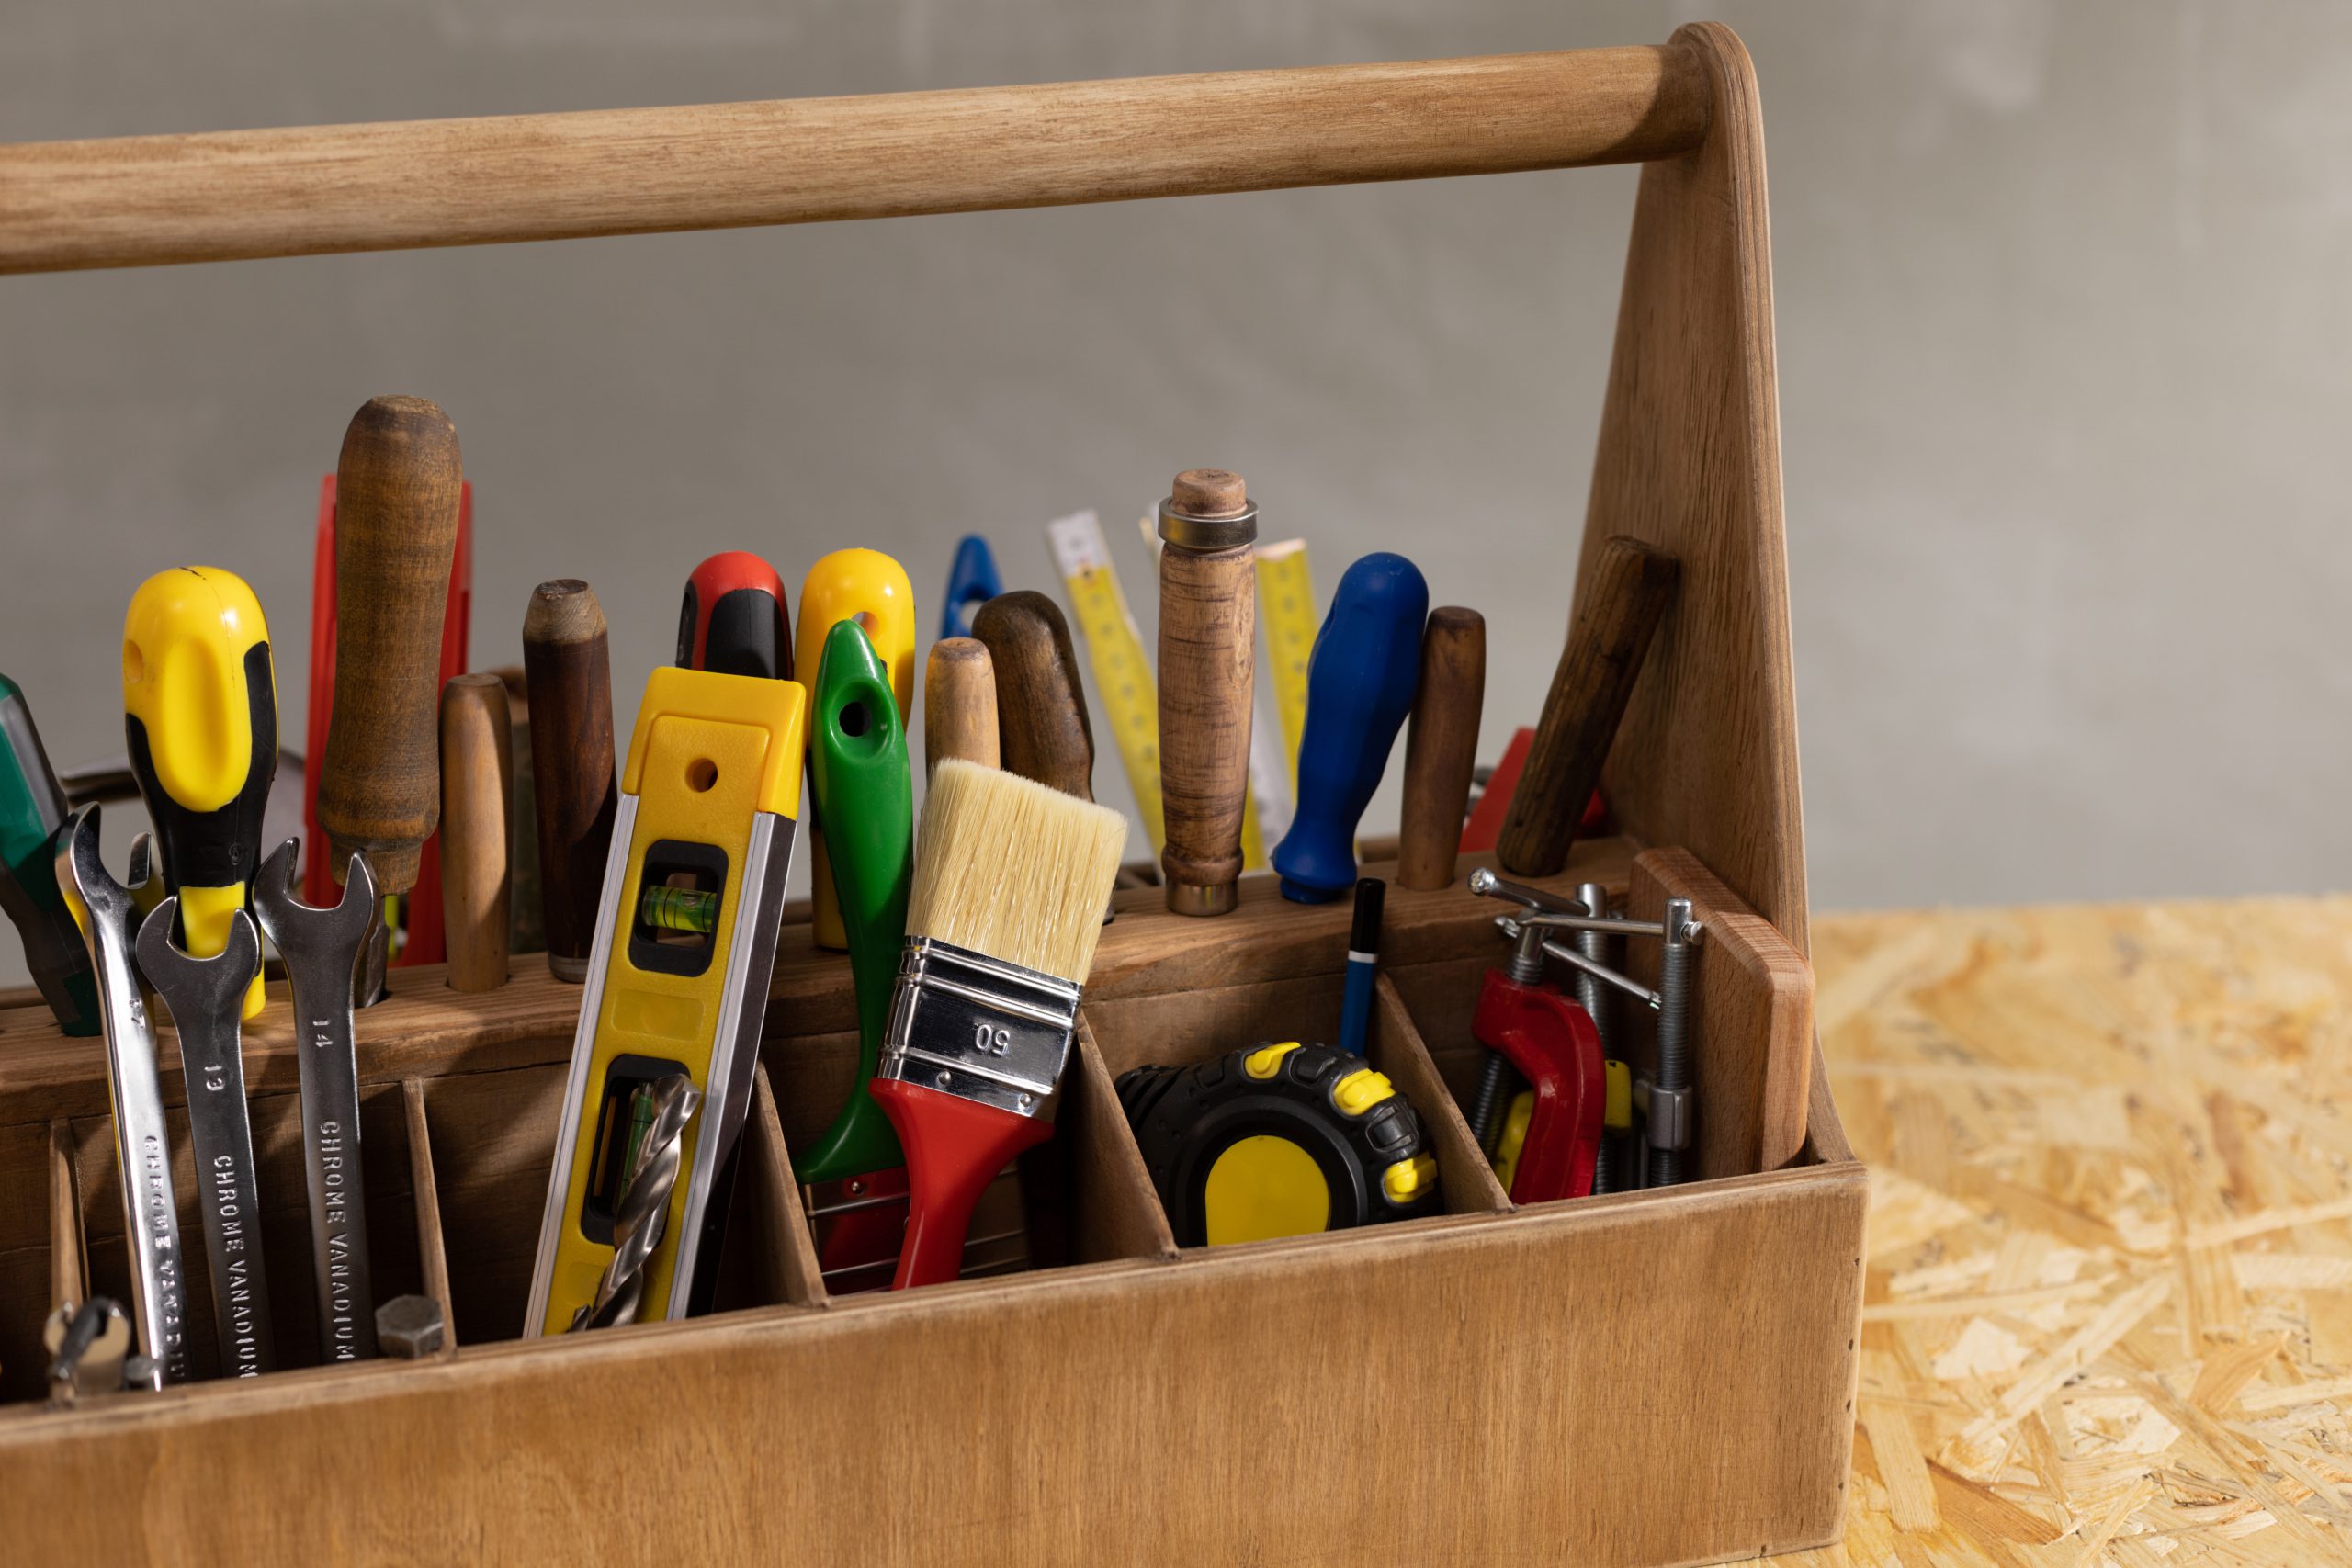 Construction Tools And Toolbox At Wooden Table Bac 2022 10 03 19 55 28 Utc